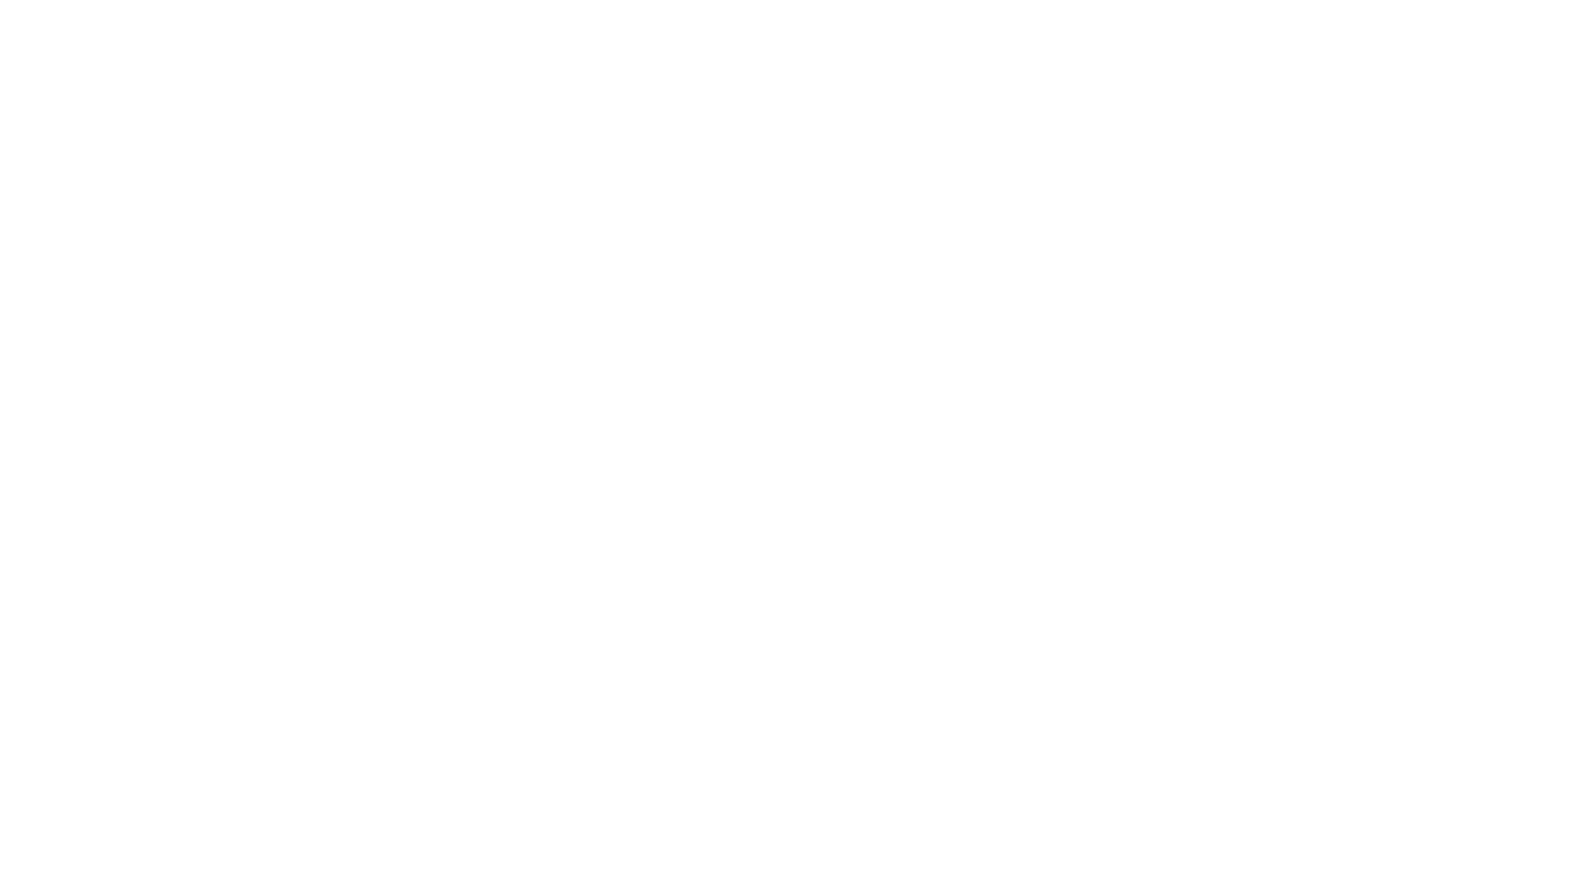 Prateek's logo.